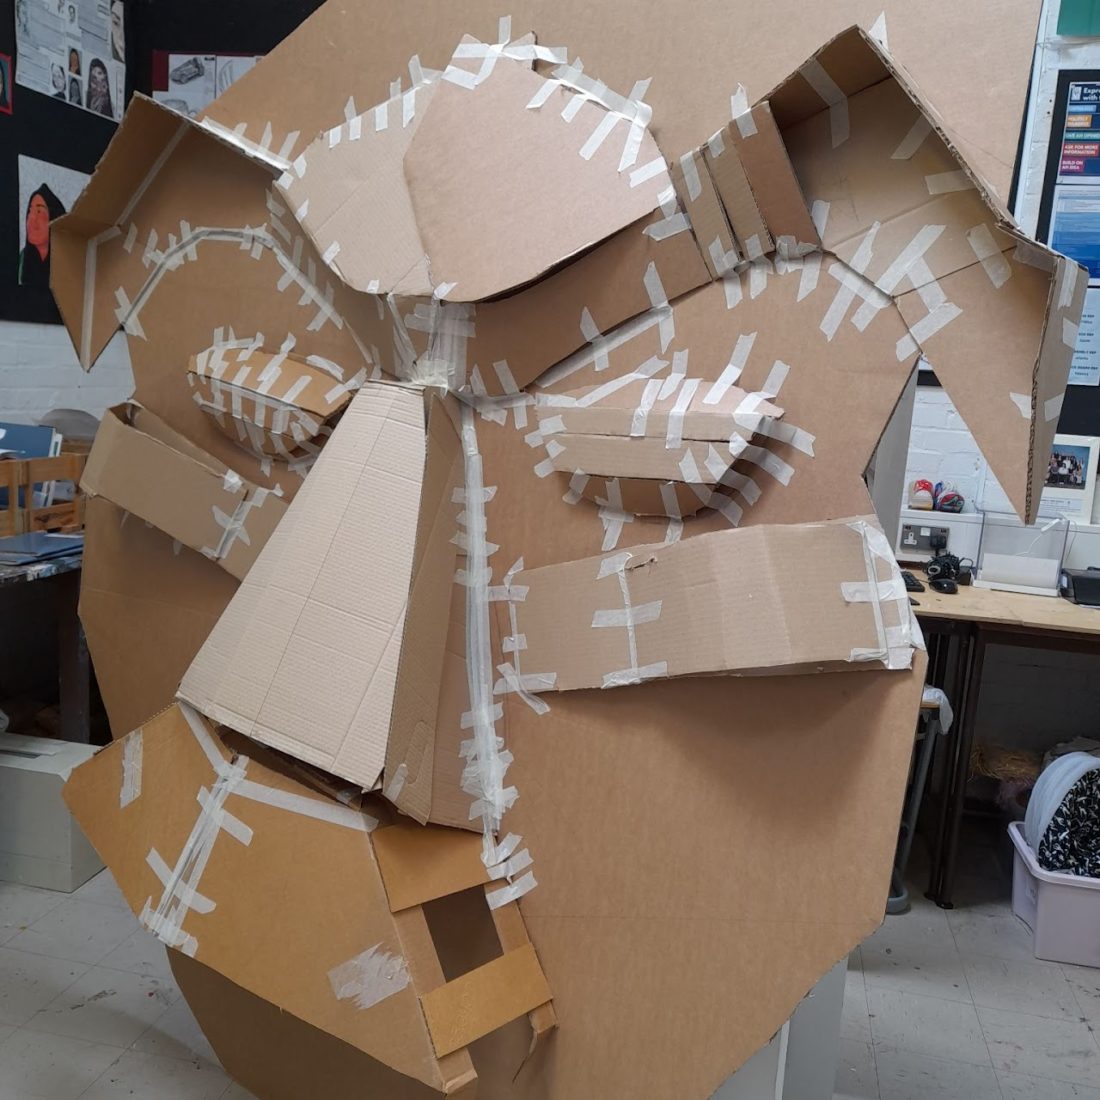 Cardboard creation in progress